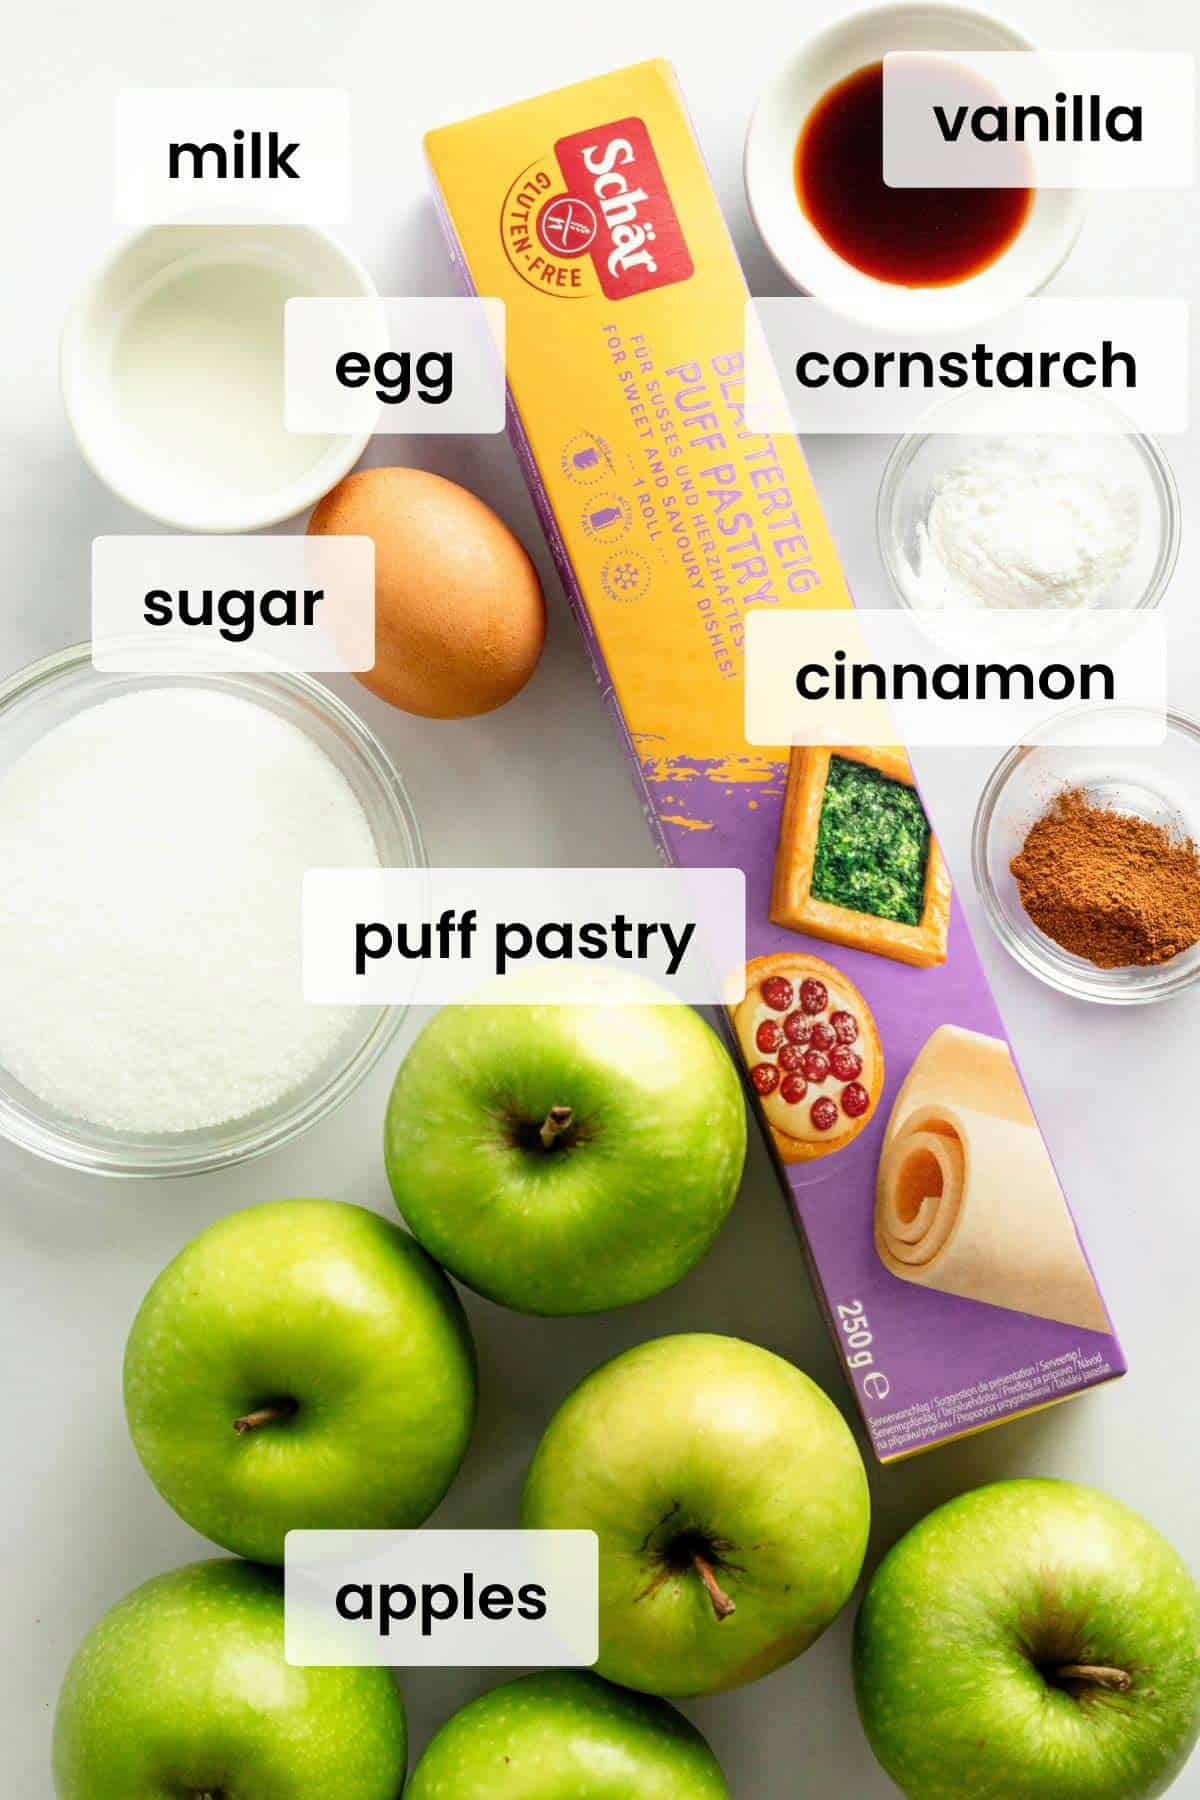 ingredients for baked apples in air fryer.